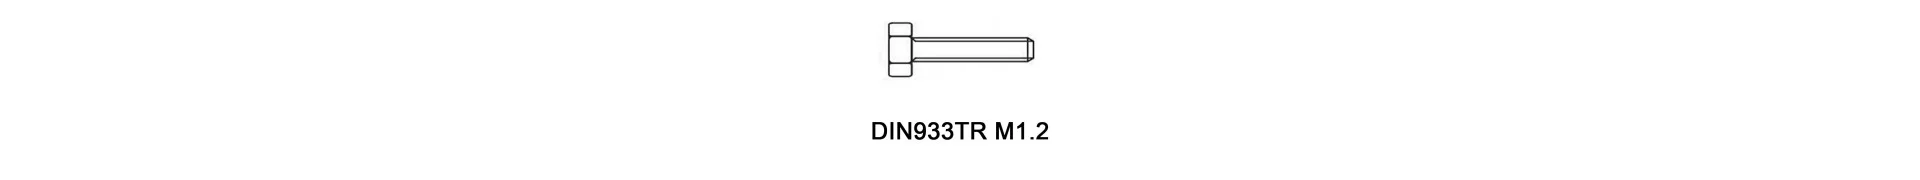 DIN933TR M1.2